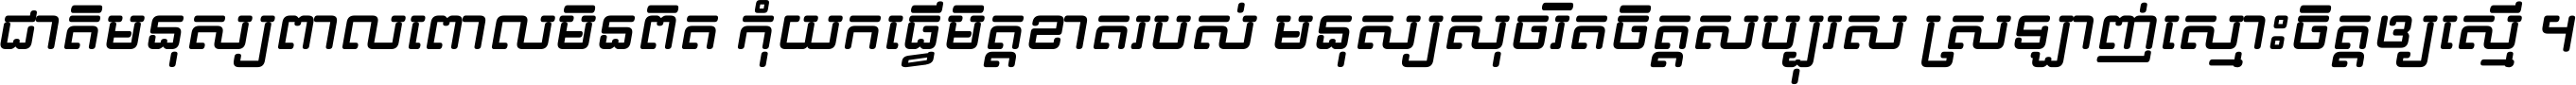 Khmer Compaq Italic